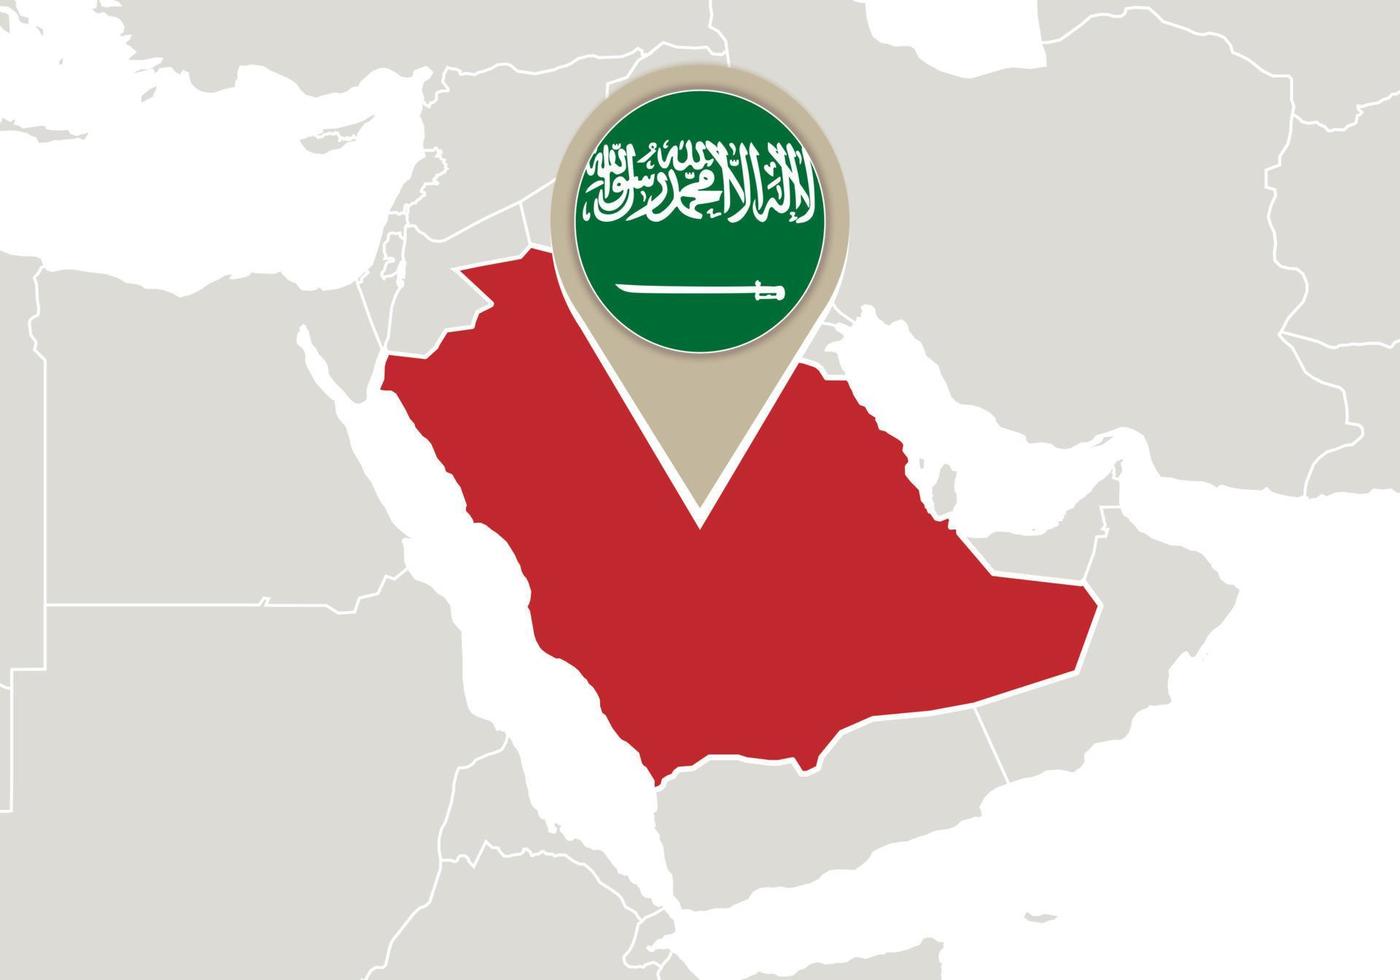 Saudi Arabia on World map vector